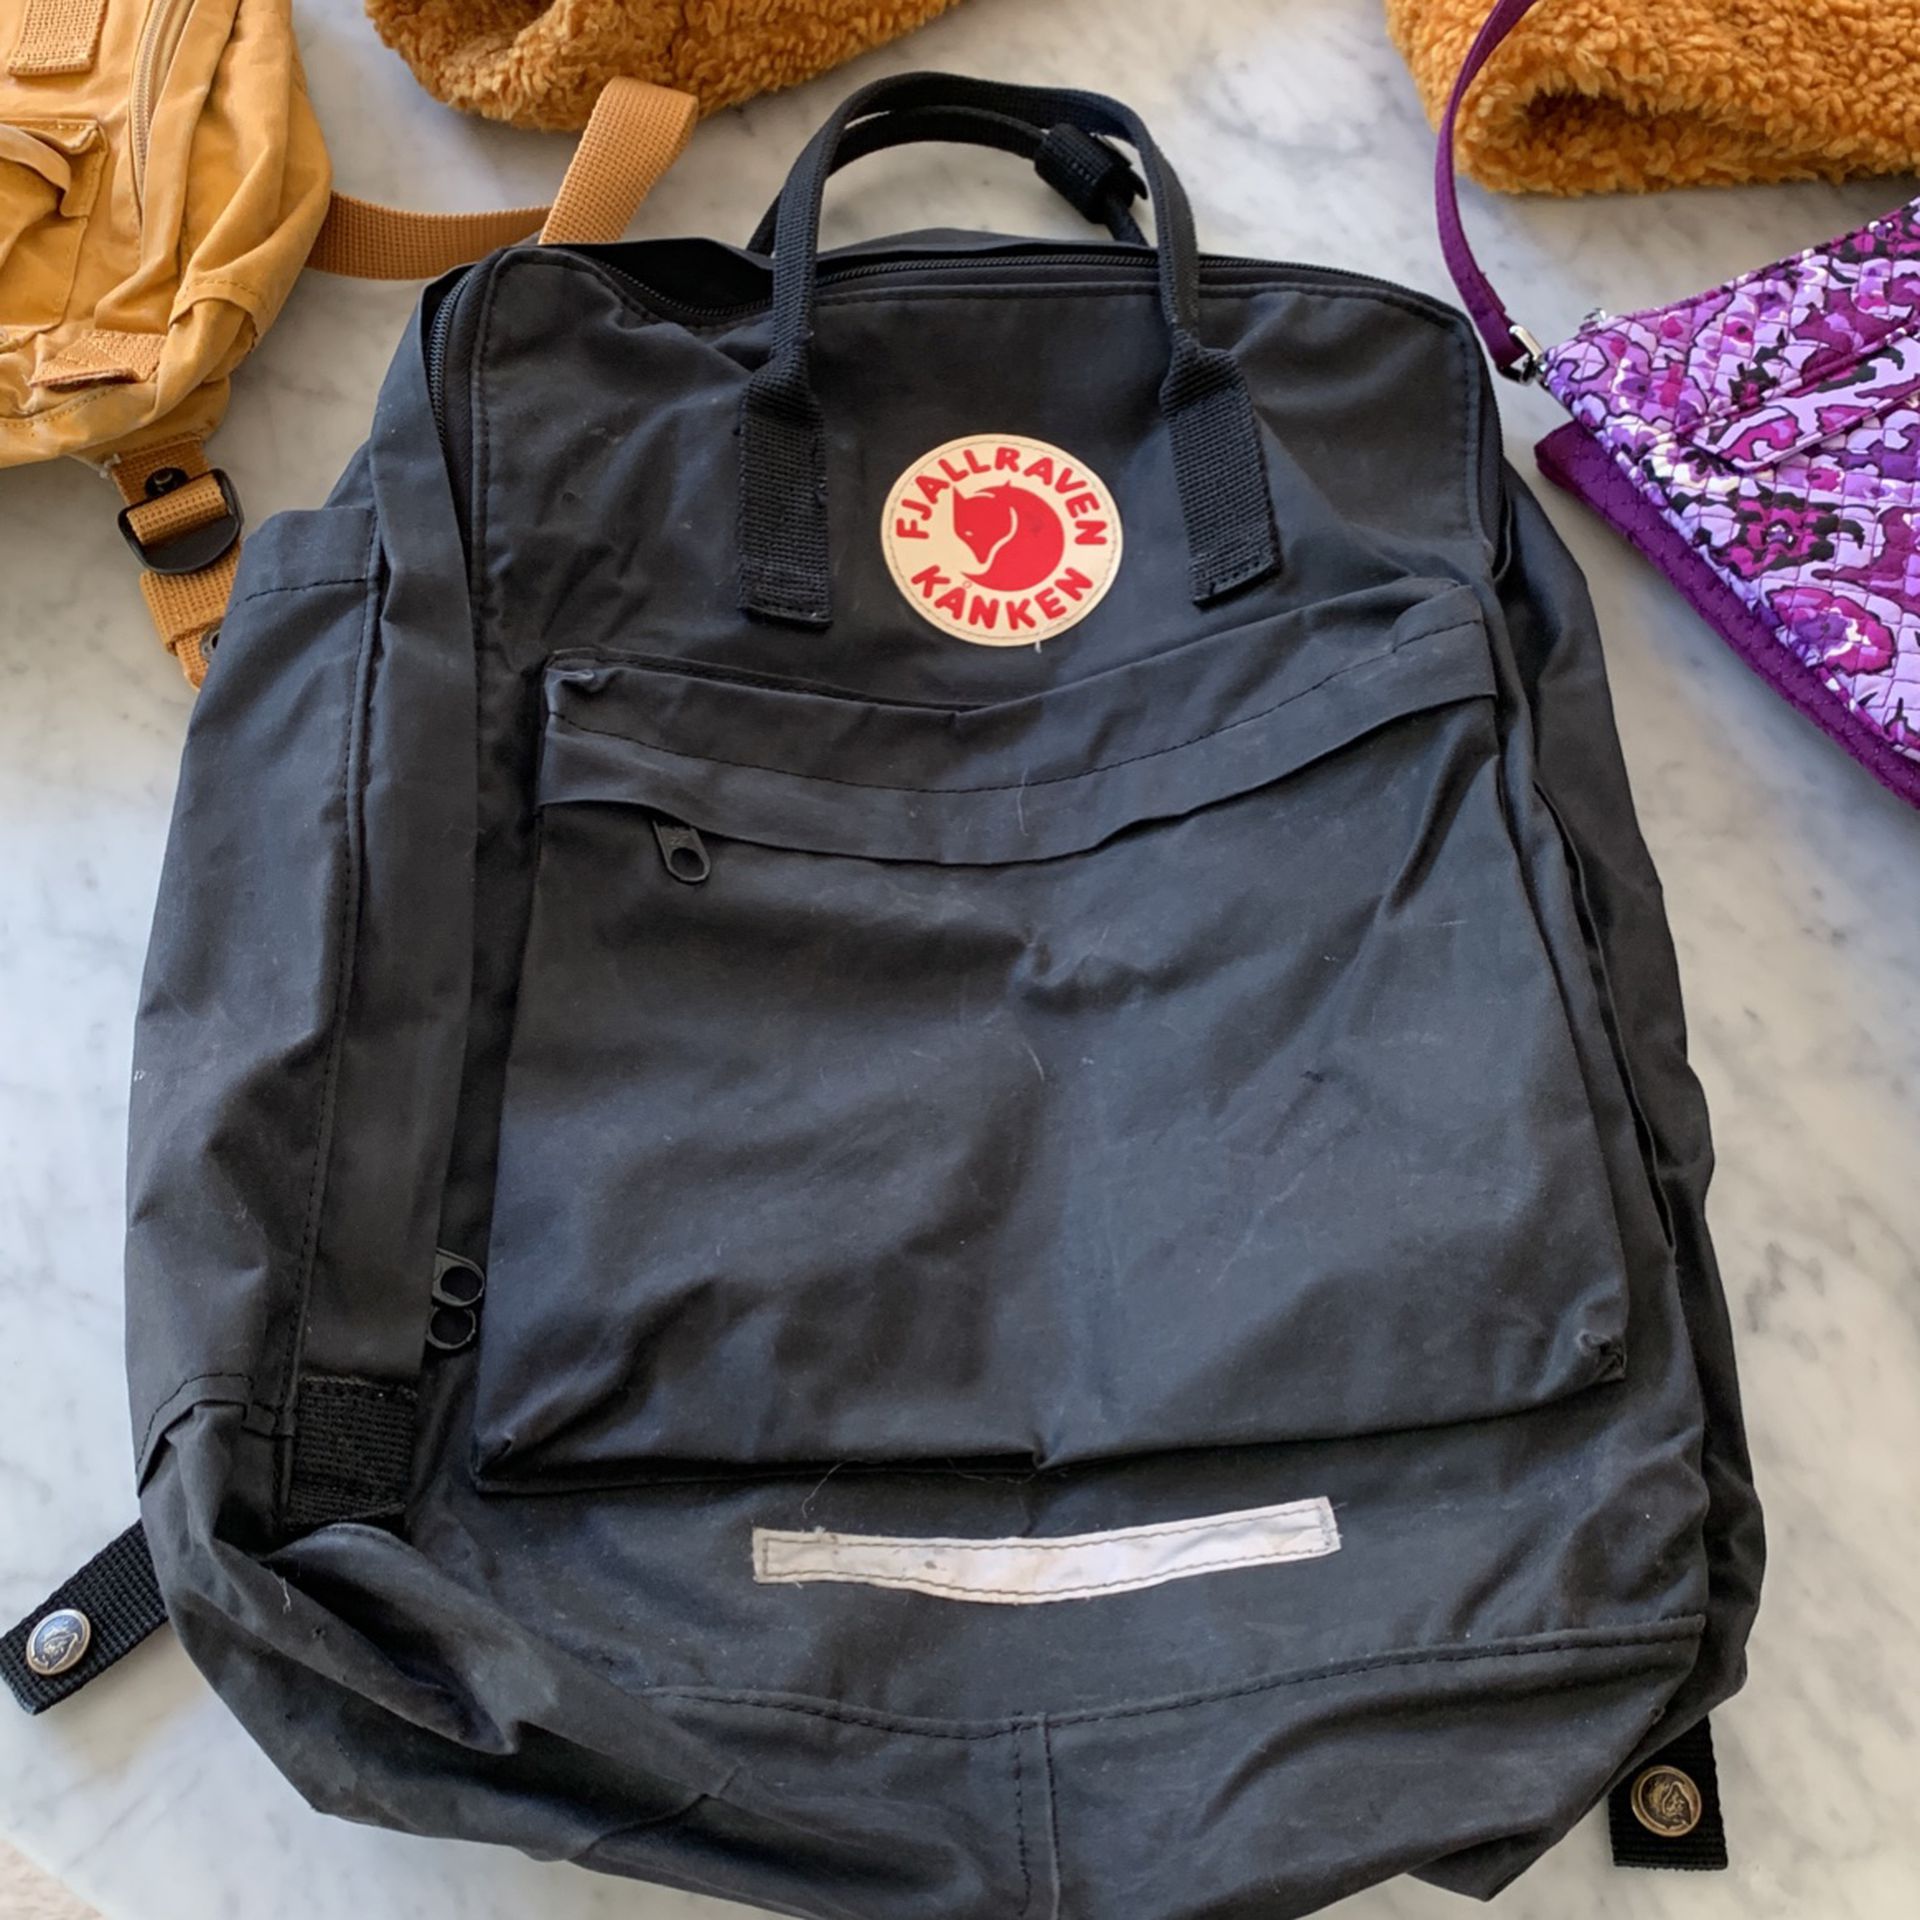 Fjallraven backpack 